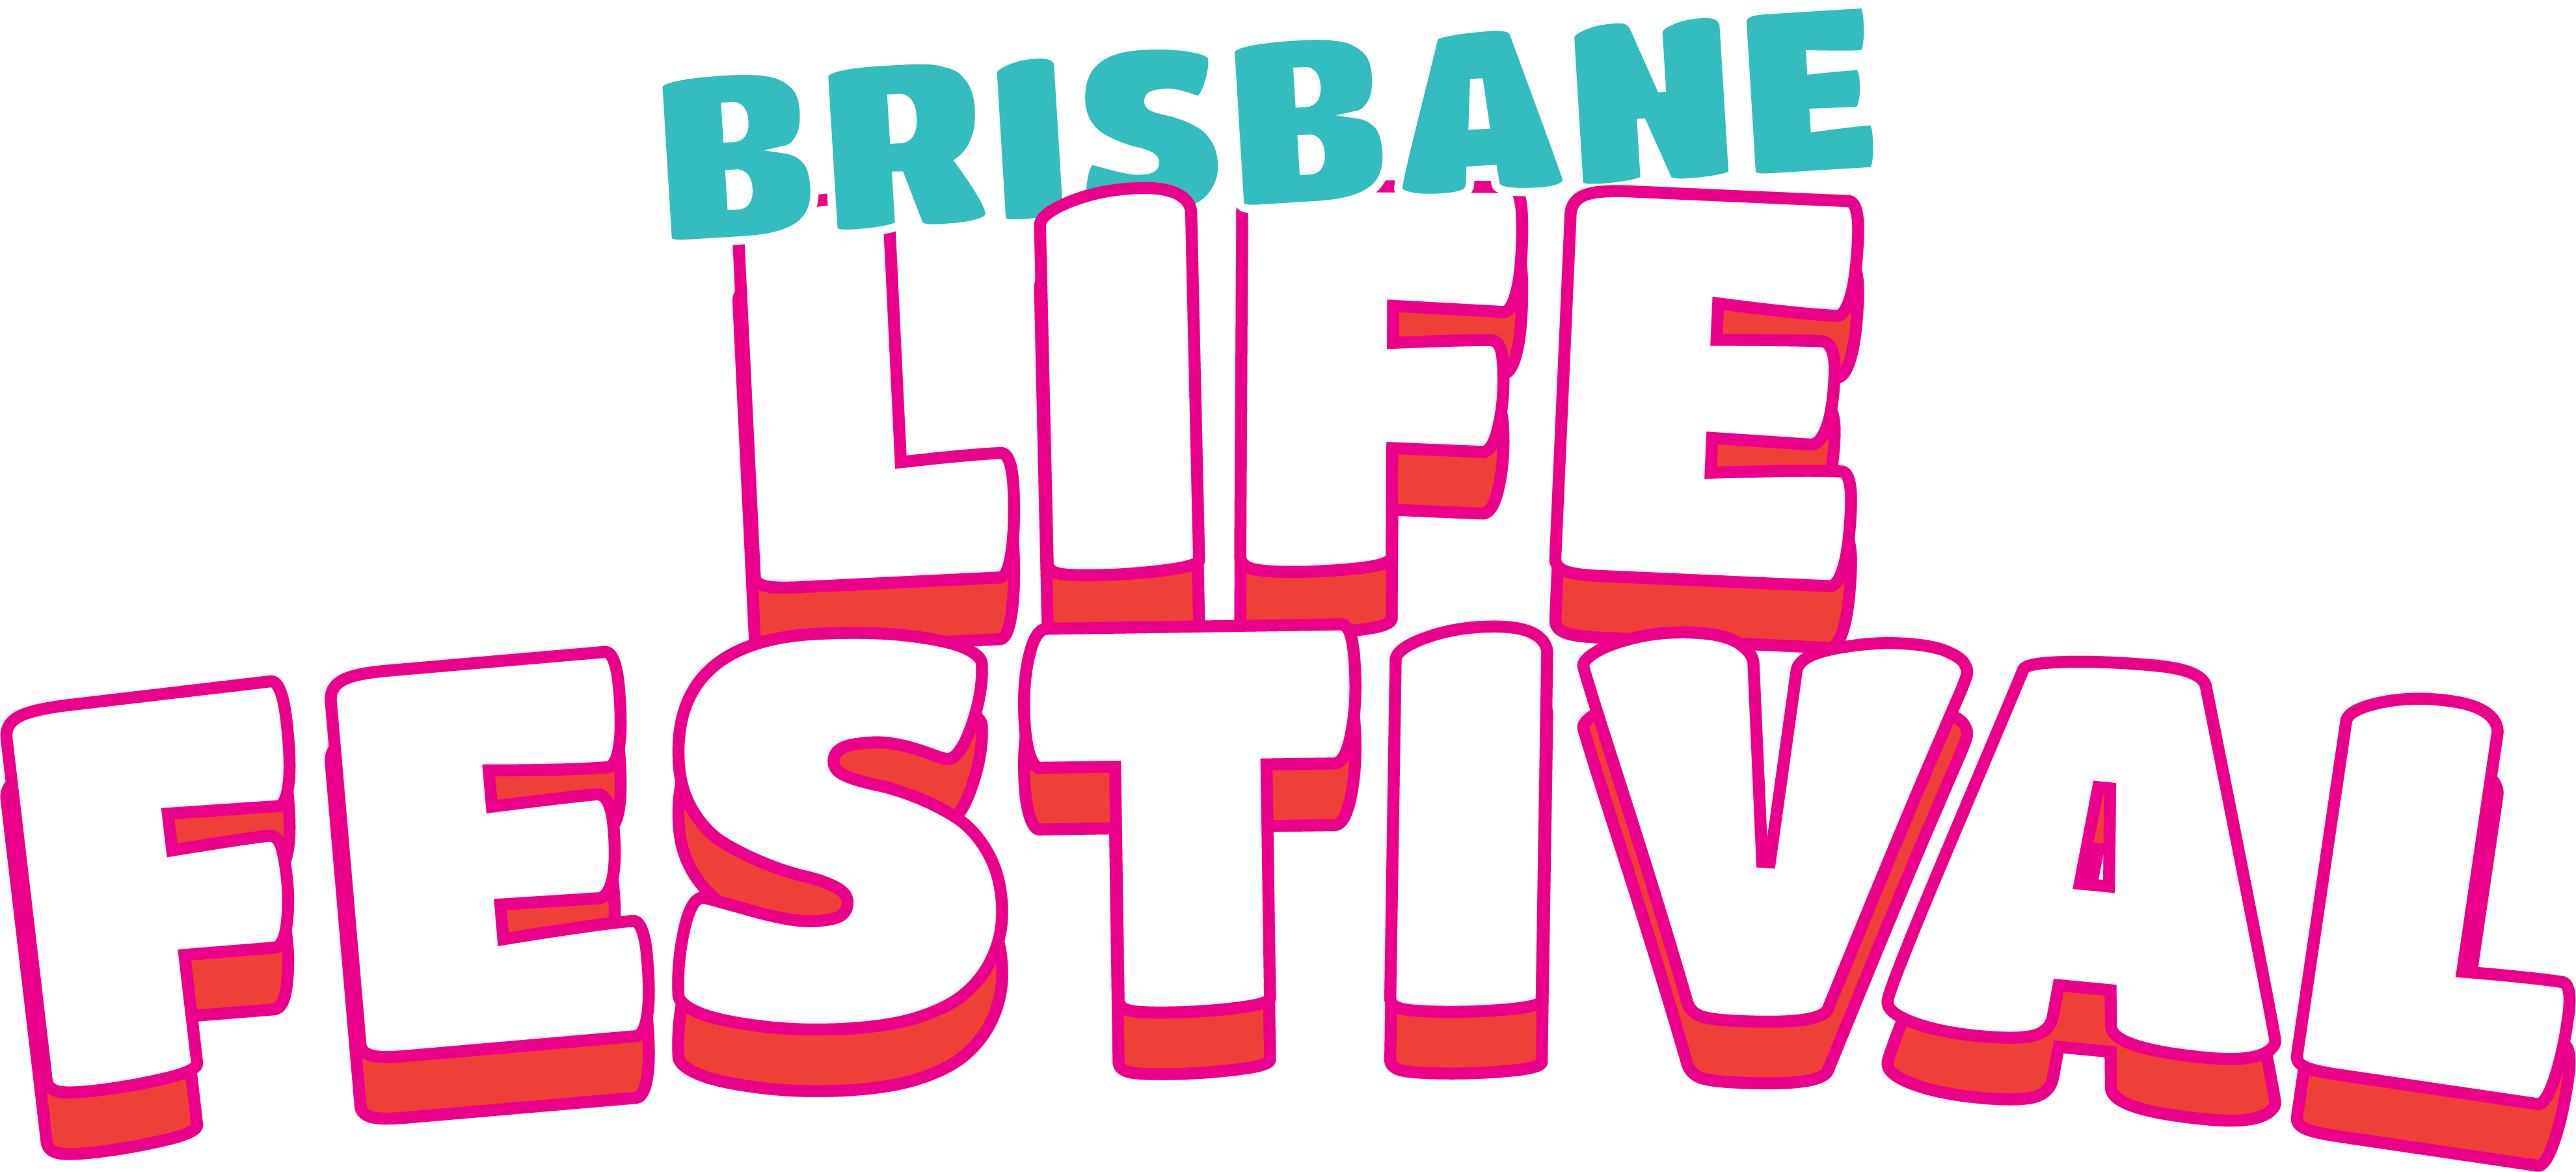 Brisbane Life Festival title